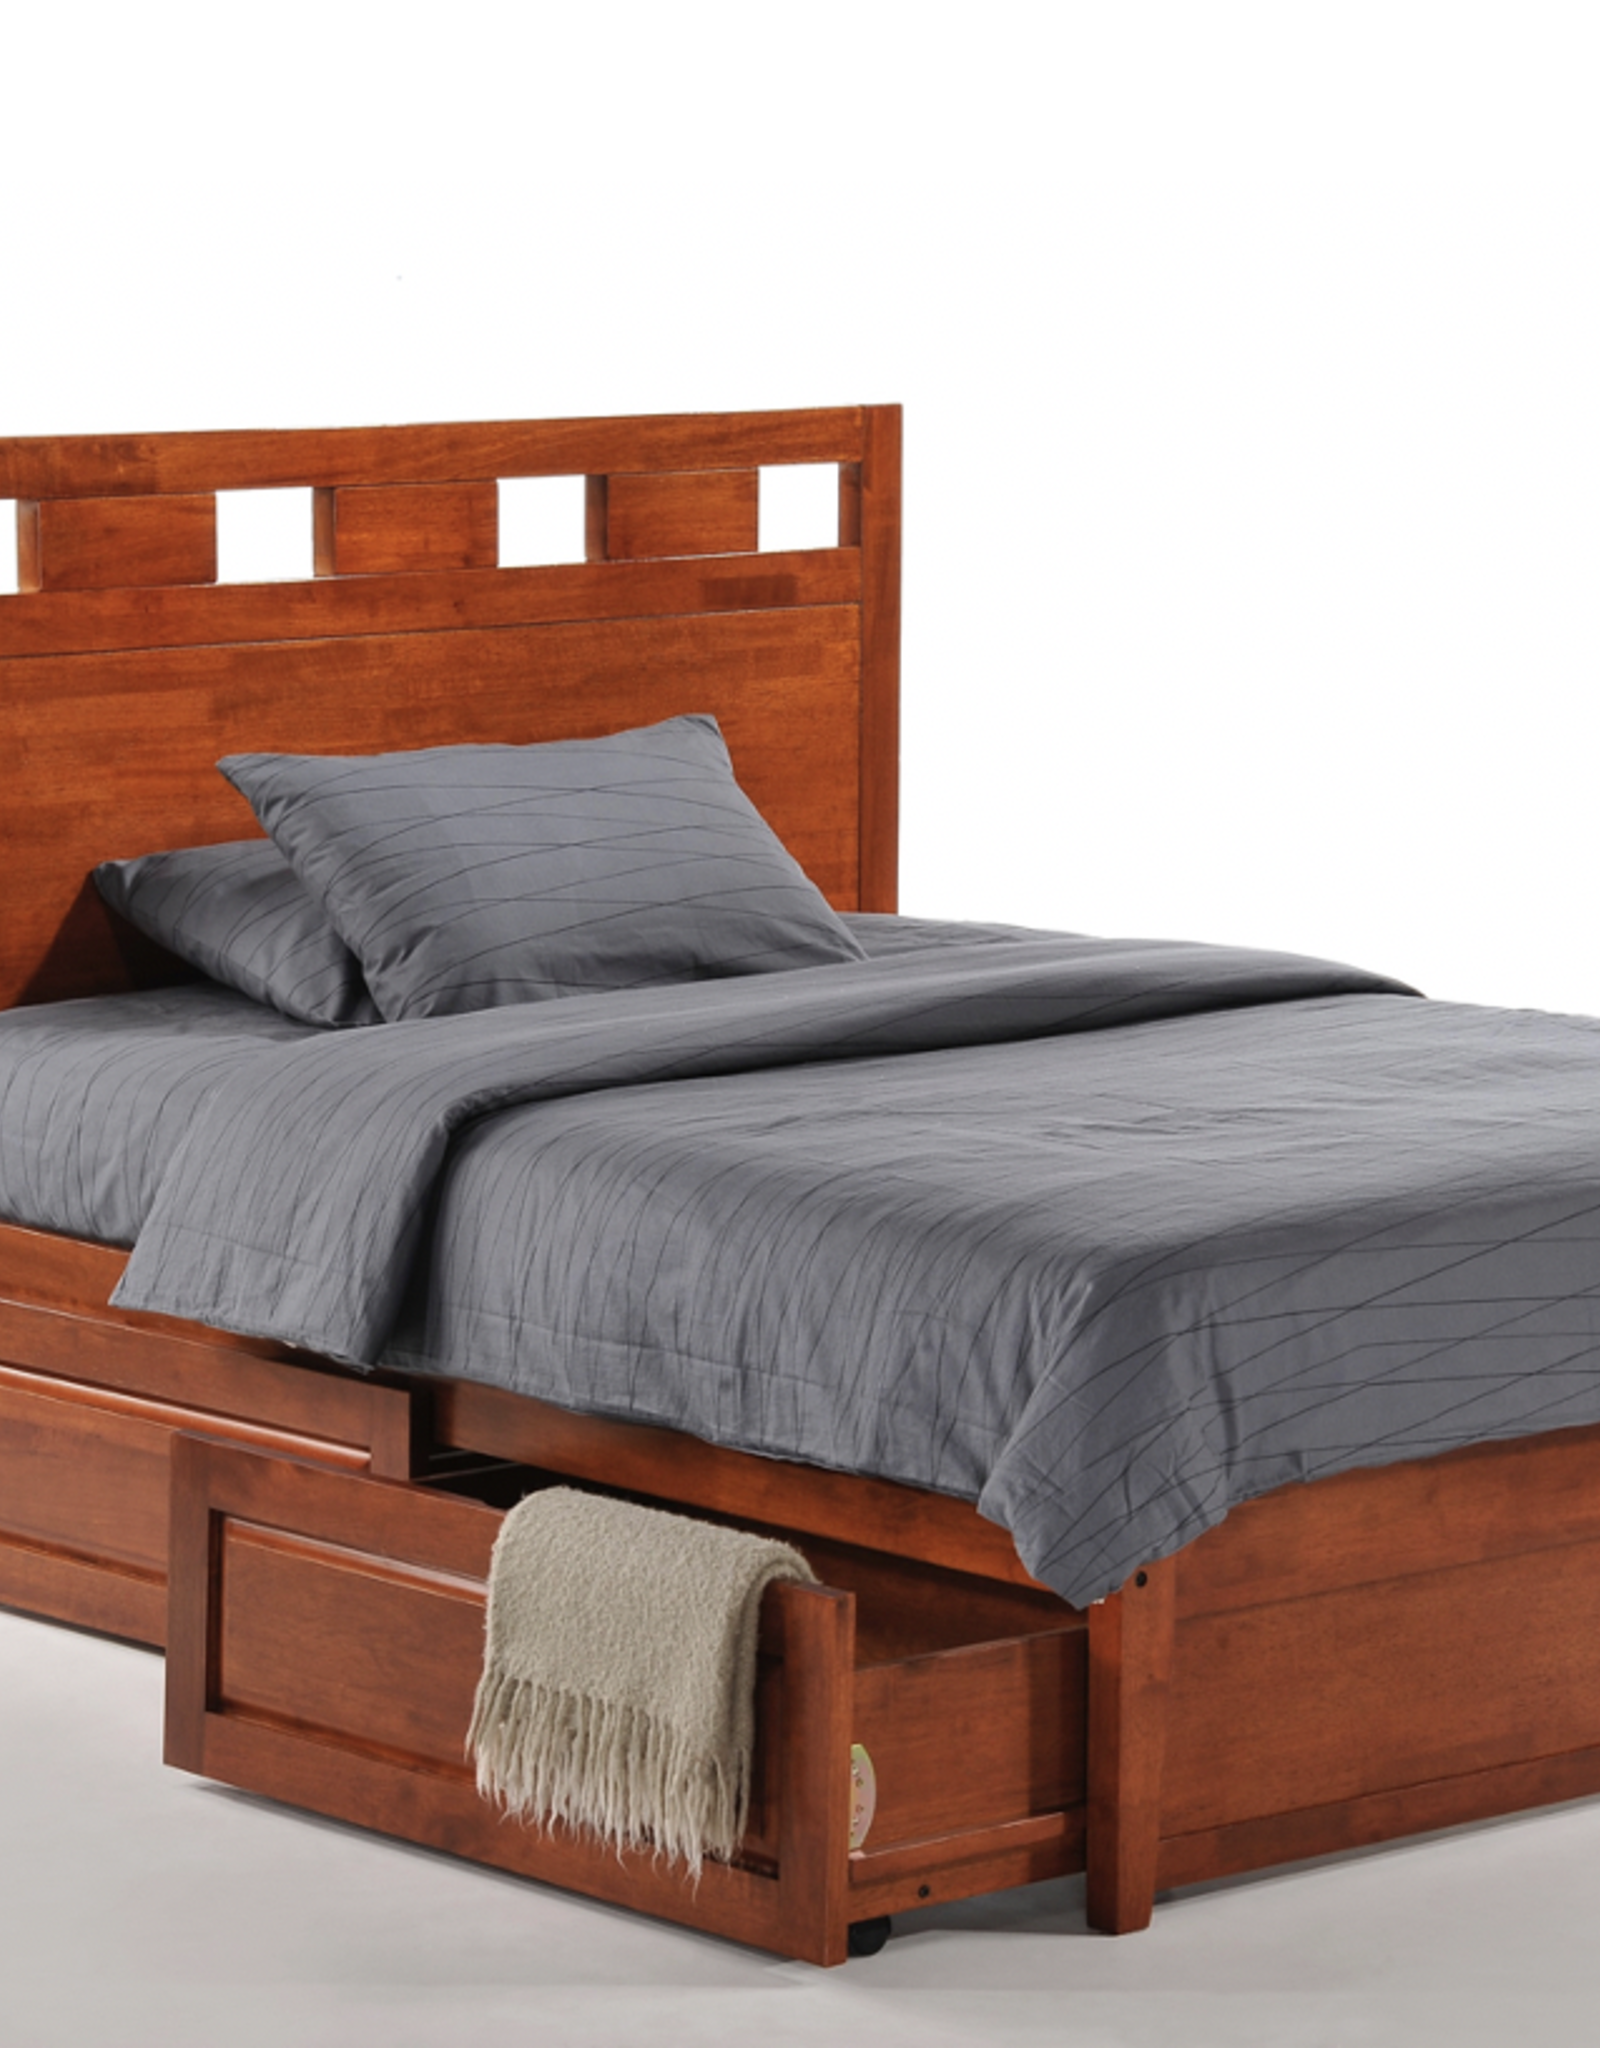 Tamarind Platform Bed - Comes in Five Colors